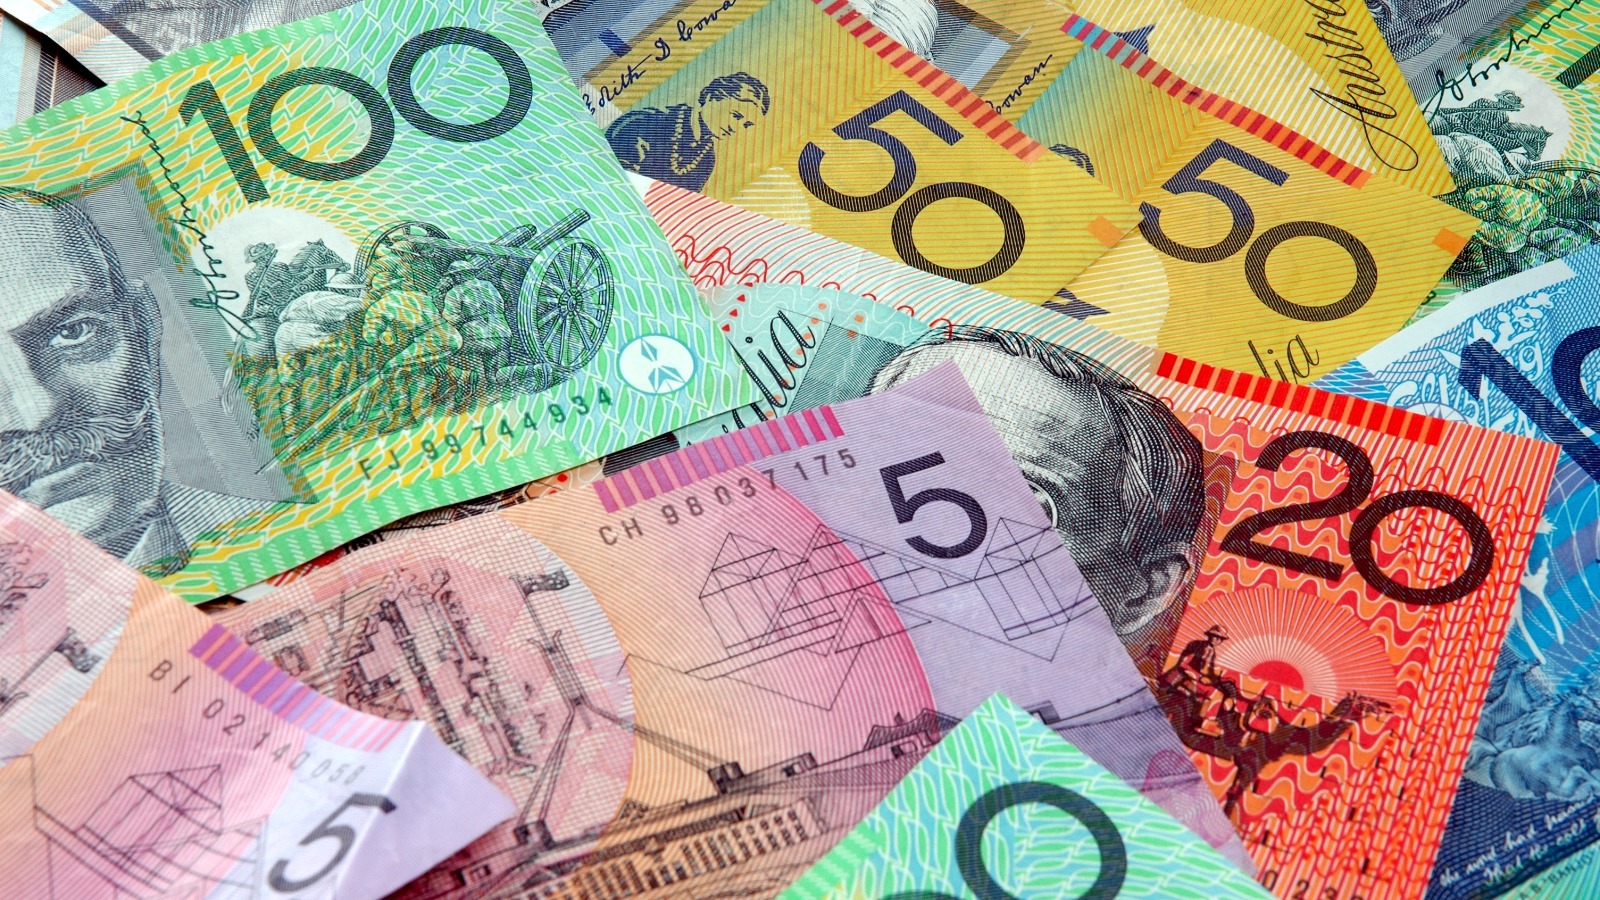 Australian bank notes - scattered